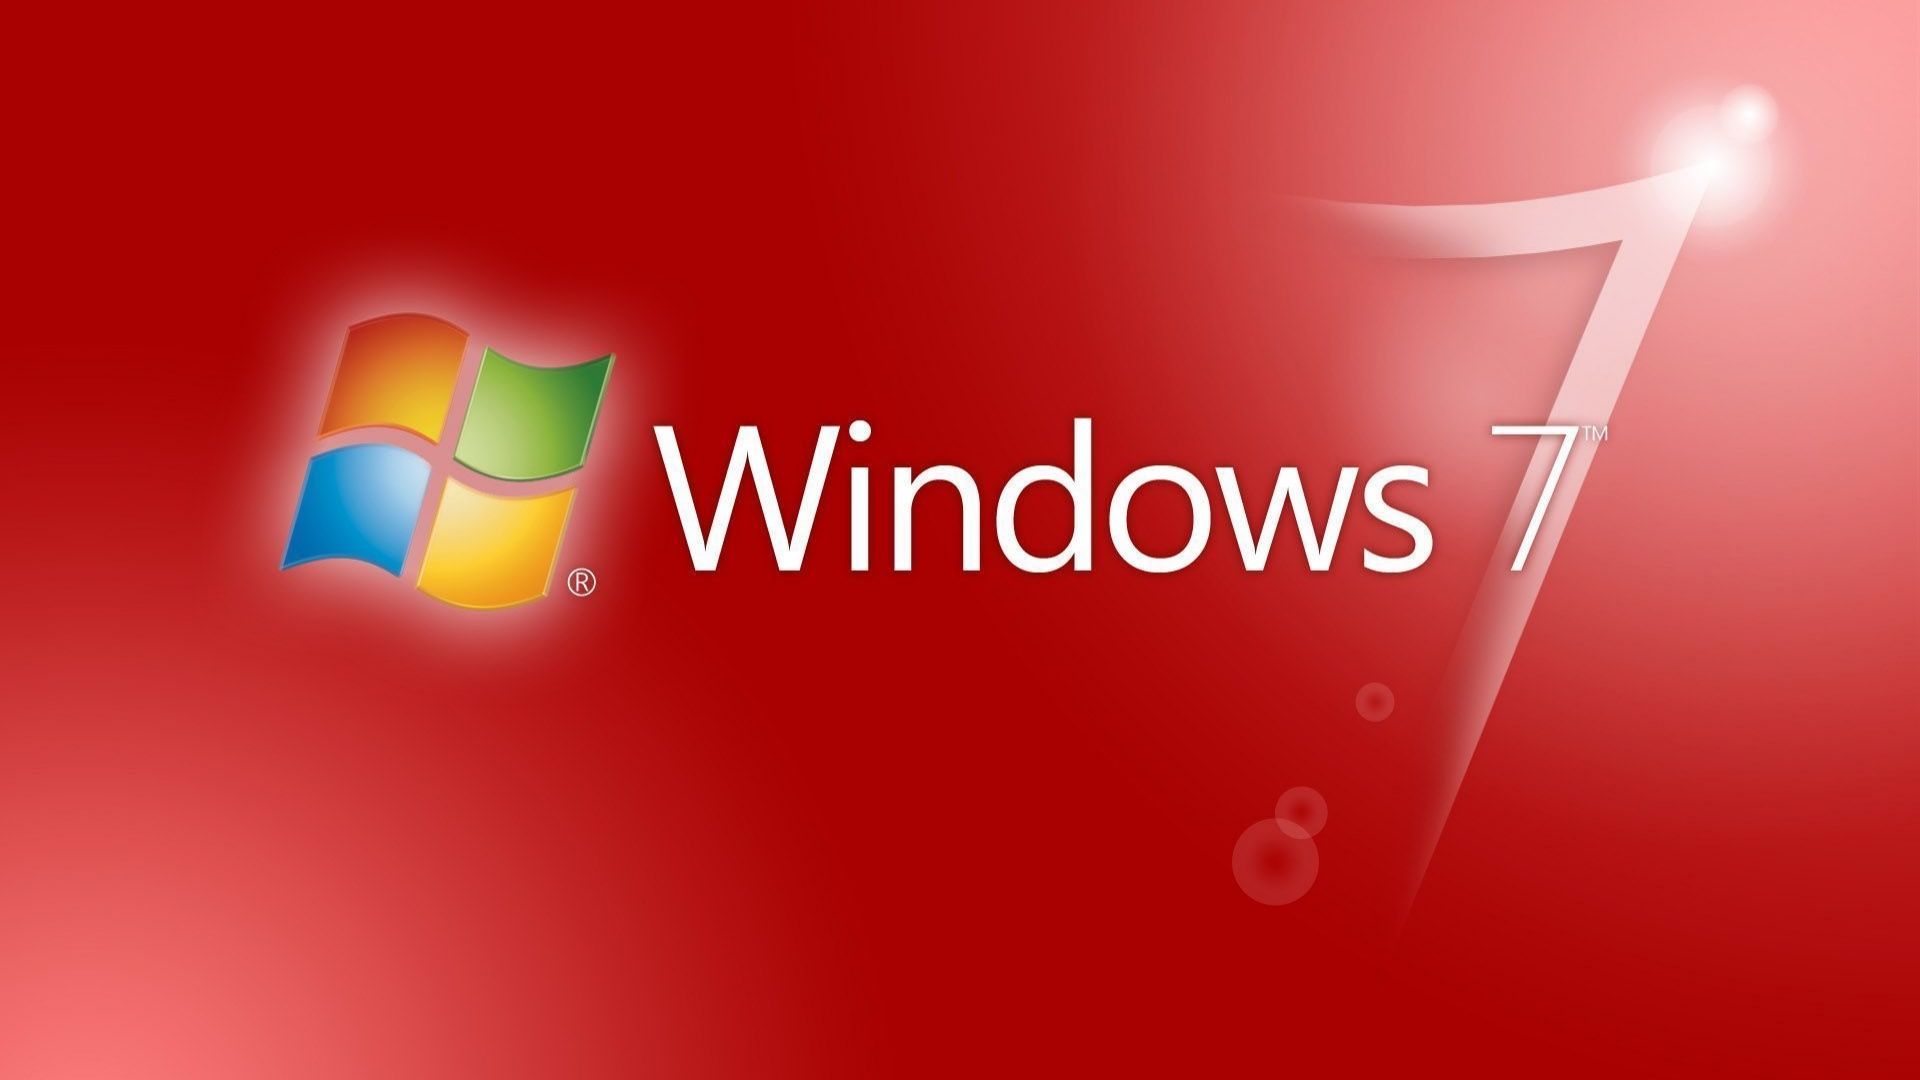 Windows 7 Red Background #17421 Wallpaper | High Resolution ...